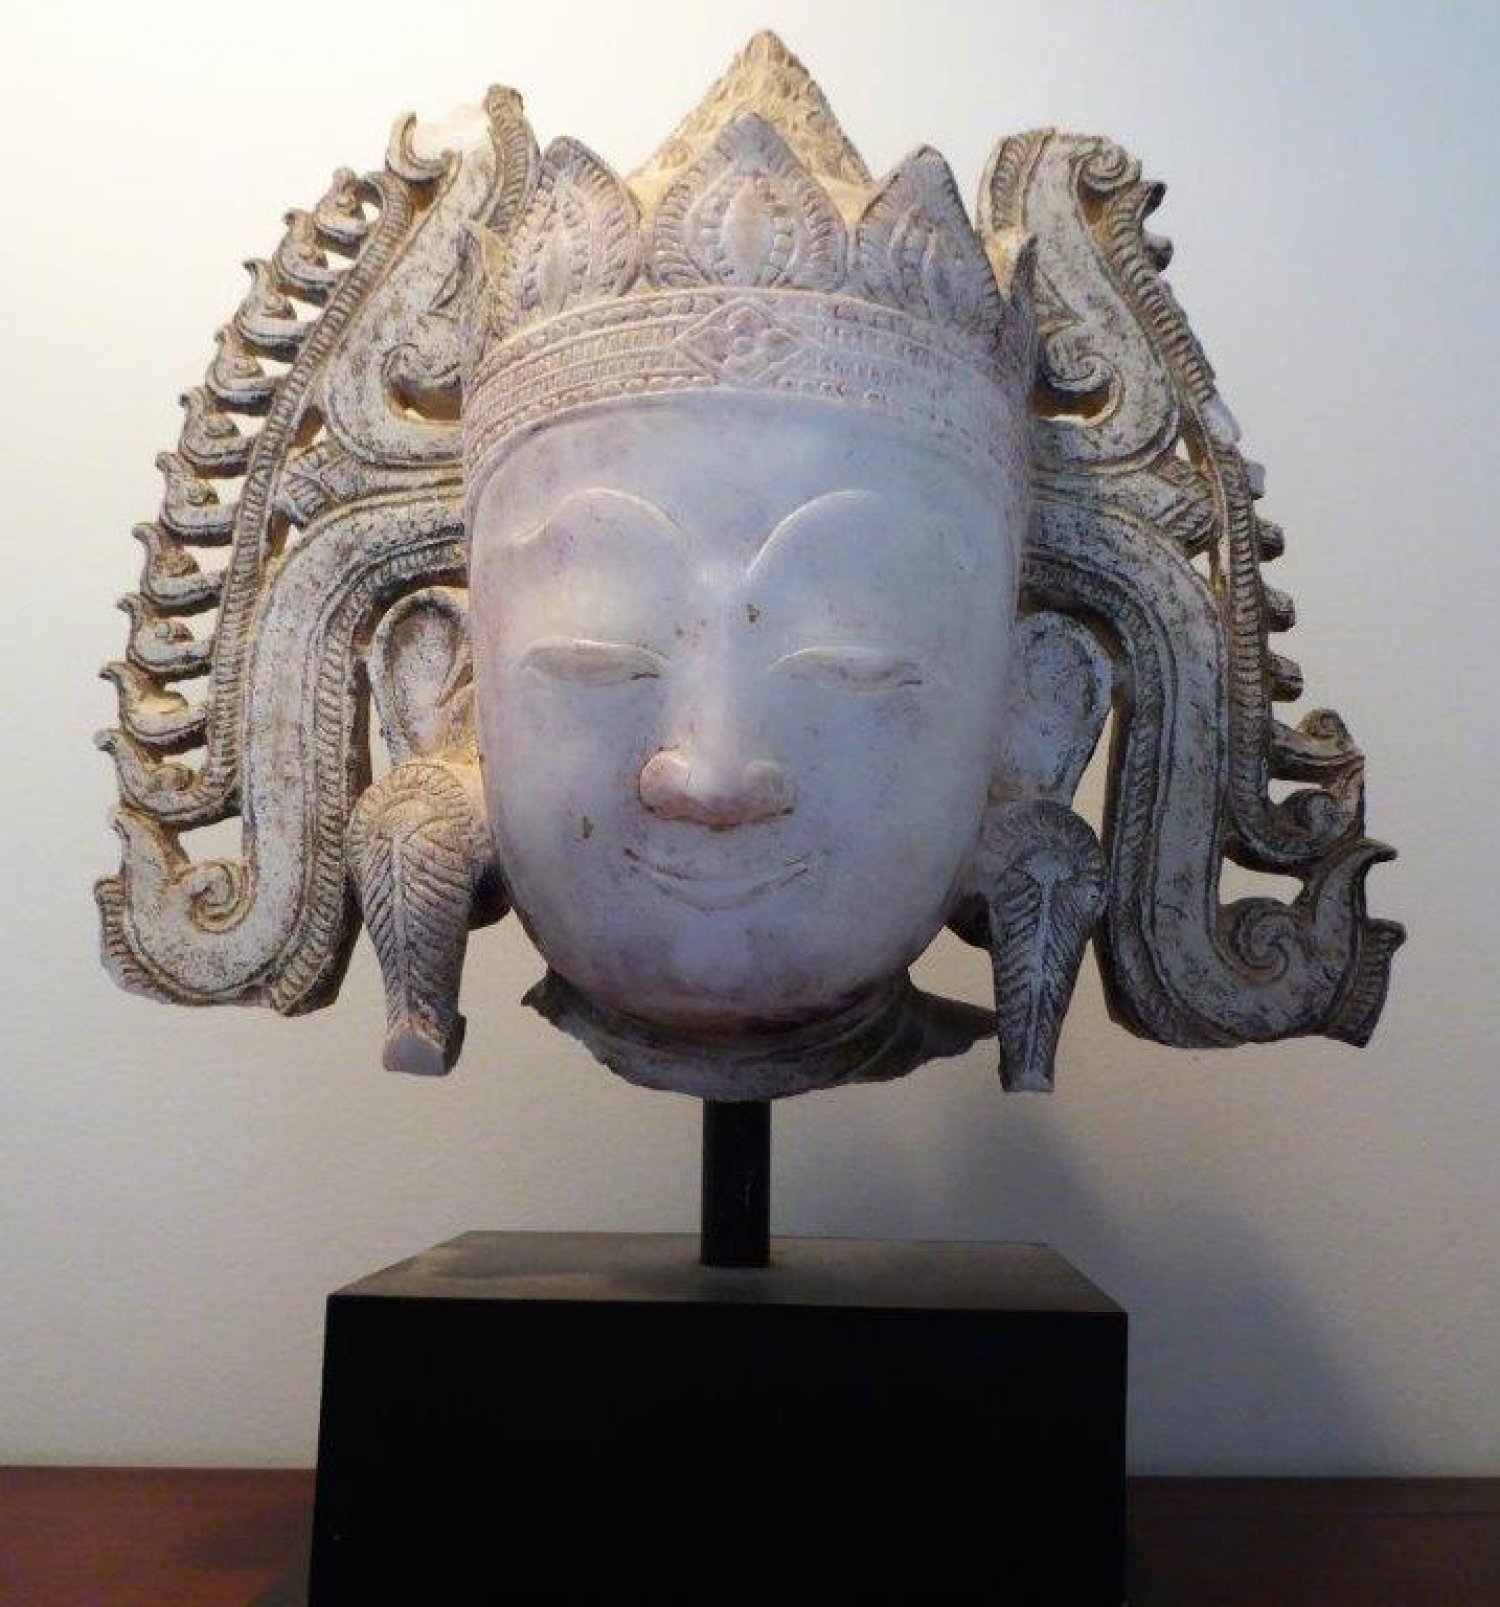 Crowned head of Buddha